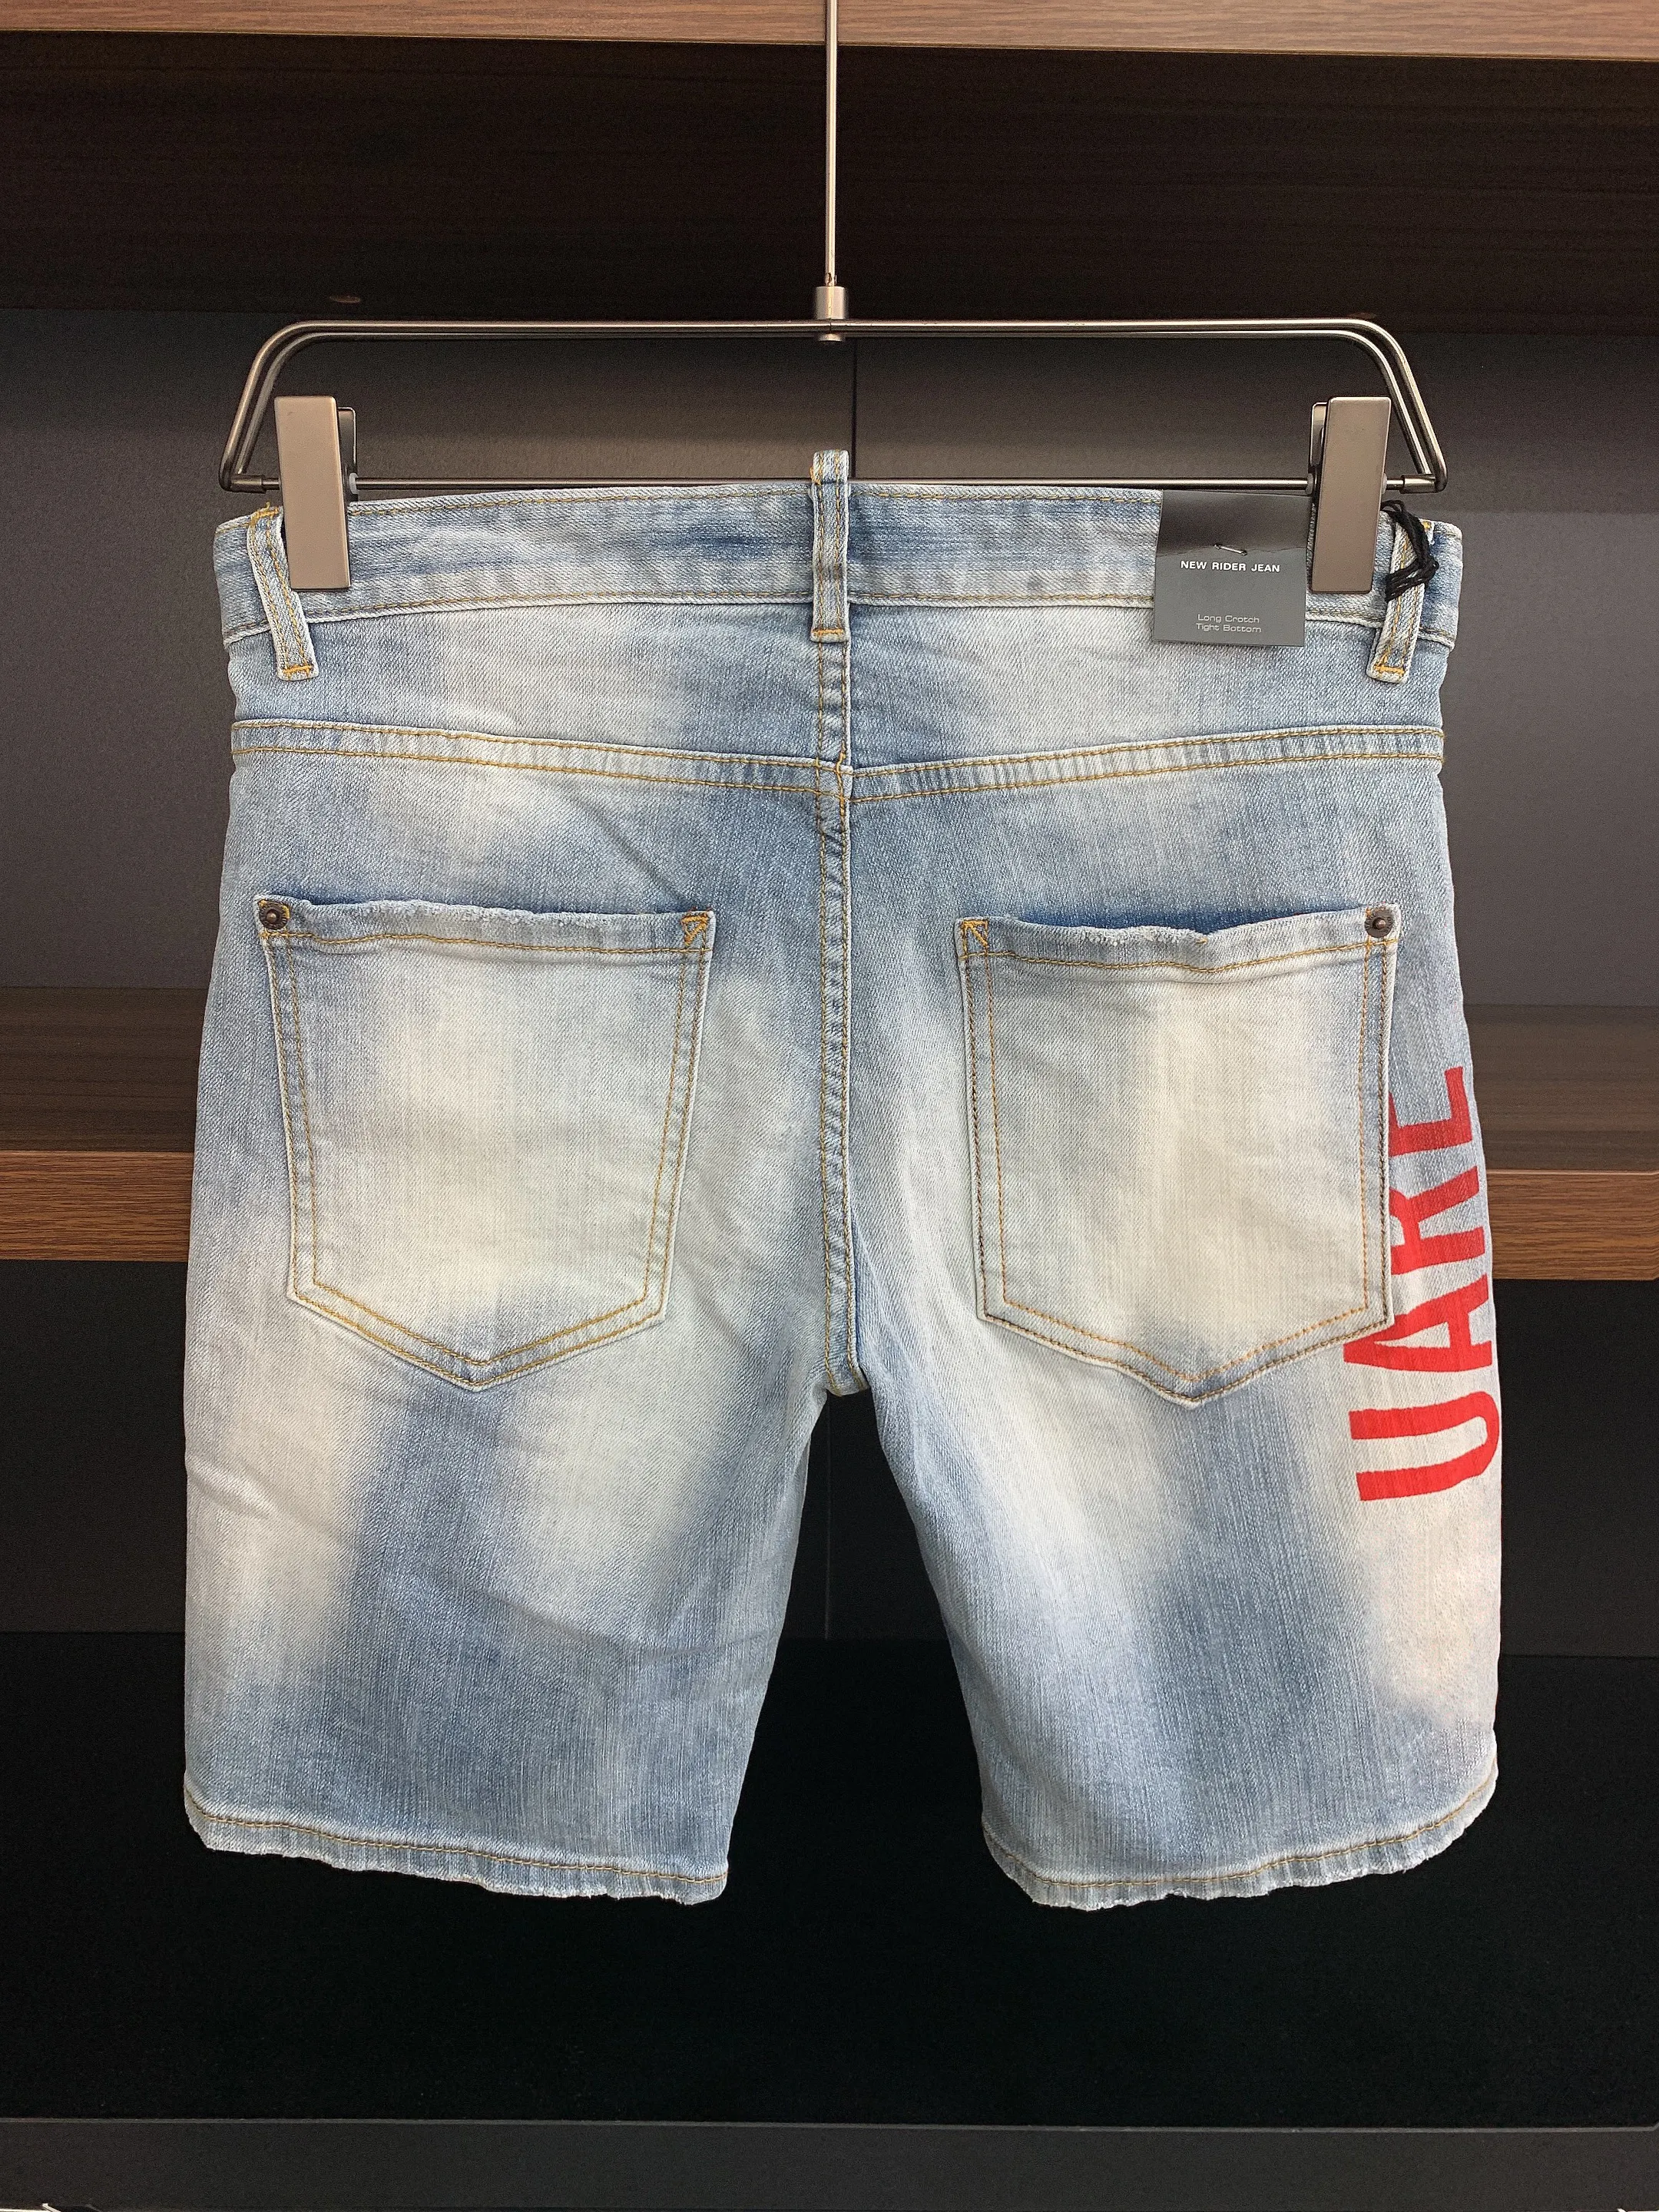 DSQ PHANTOM TURTLE Jeans Männer Jean Herren Luxus Designer Skinny Ripped Cool Guy Kausal Loch Denim Mode Marke Fit Jeans Mann Washed202f